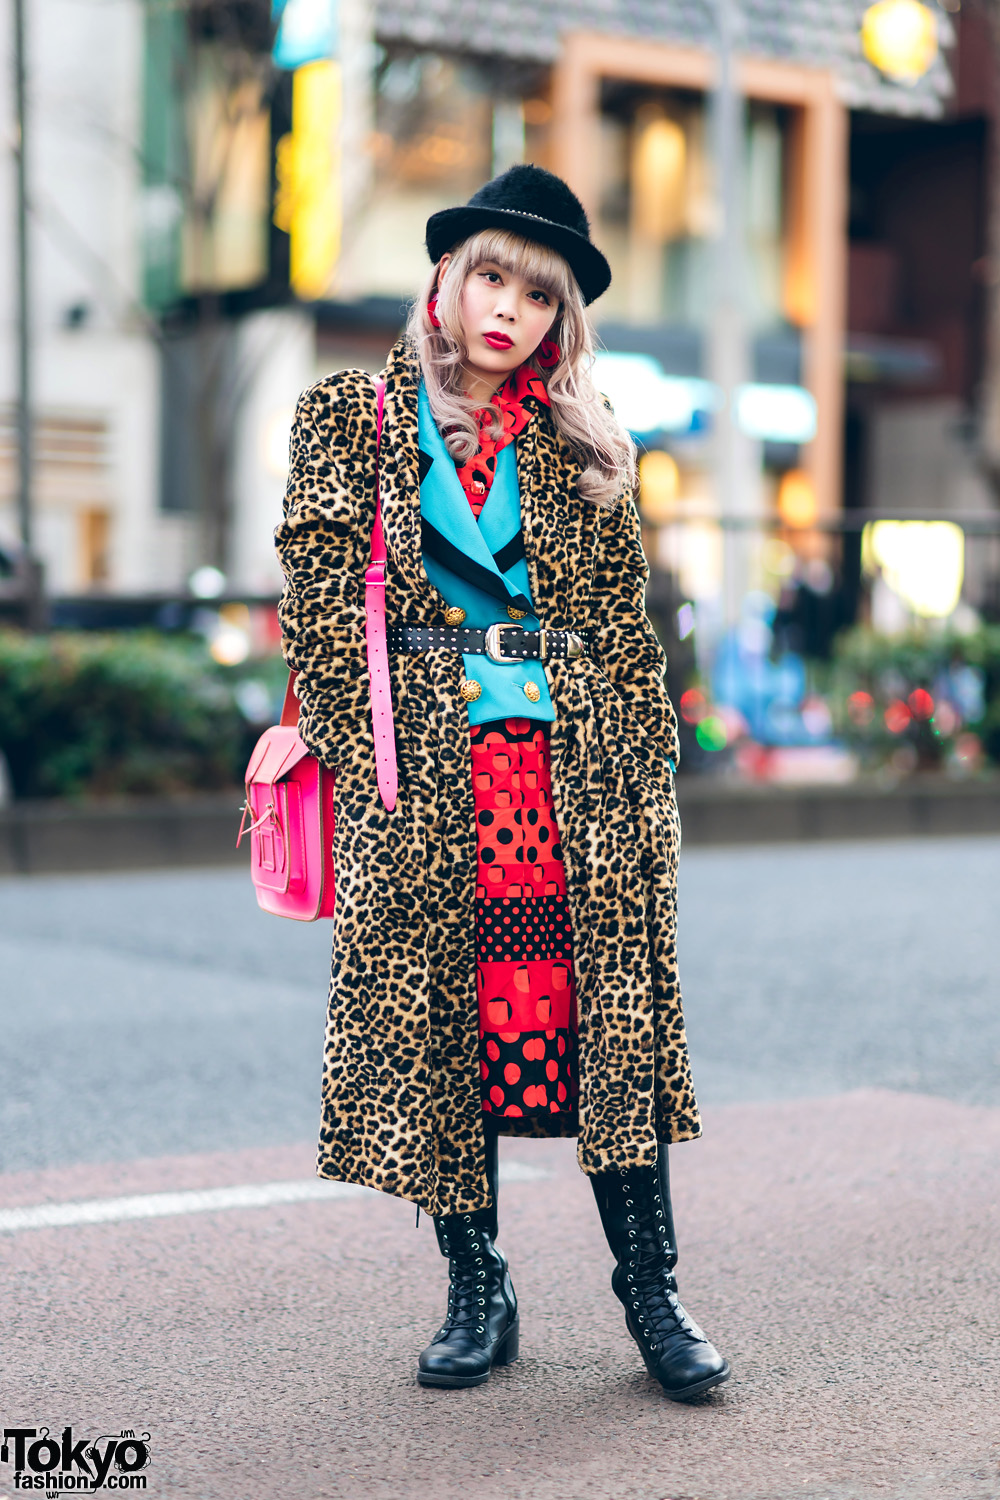 Kinji Shimokitazawa Staffer in Mixed Prints Fashion w/ Leopard Print Maxi Coat, Polka Dot Dress, Aqua Blazer, Esperanza Knee Boots, Furry Fedora & The Cambridge Satchel Company Bag